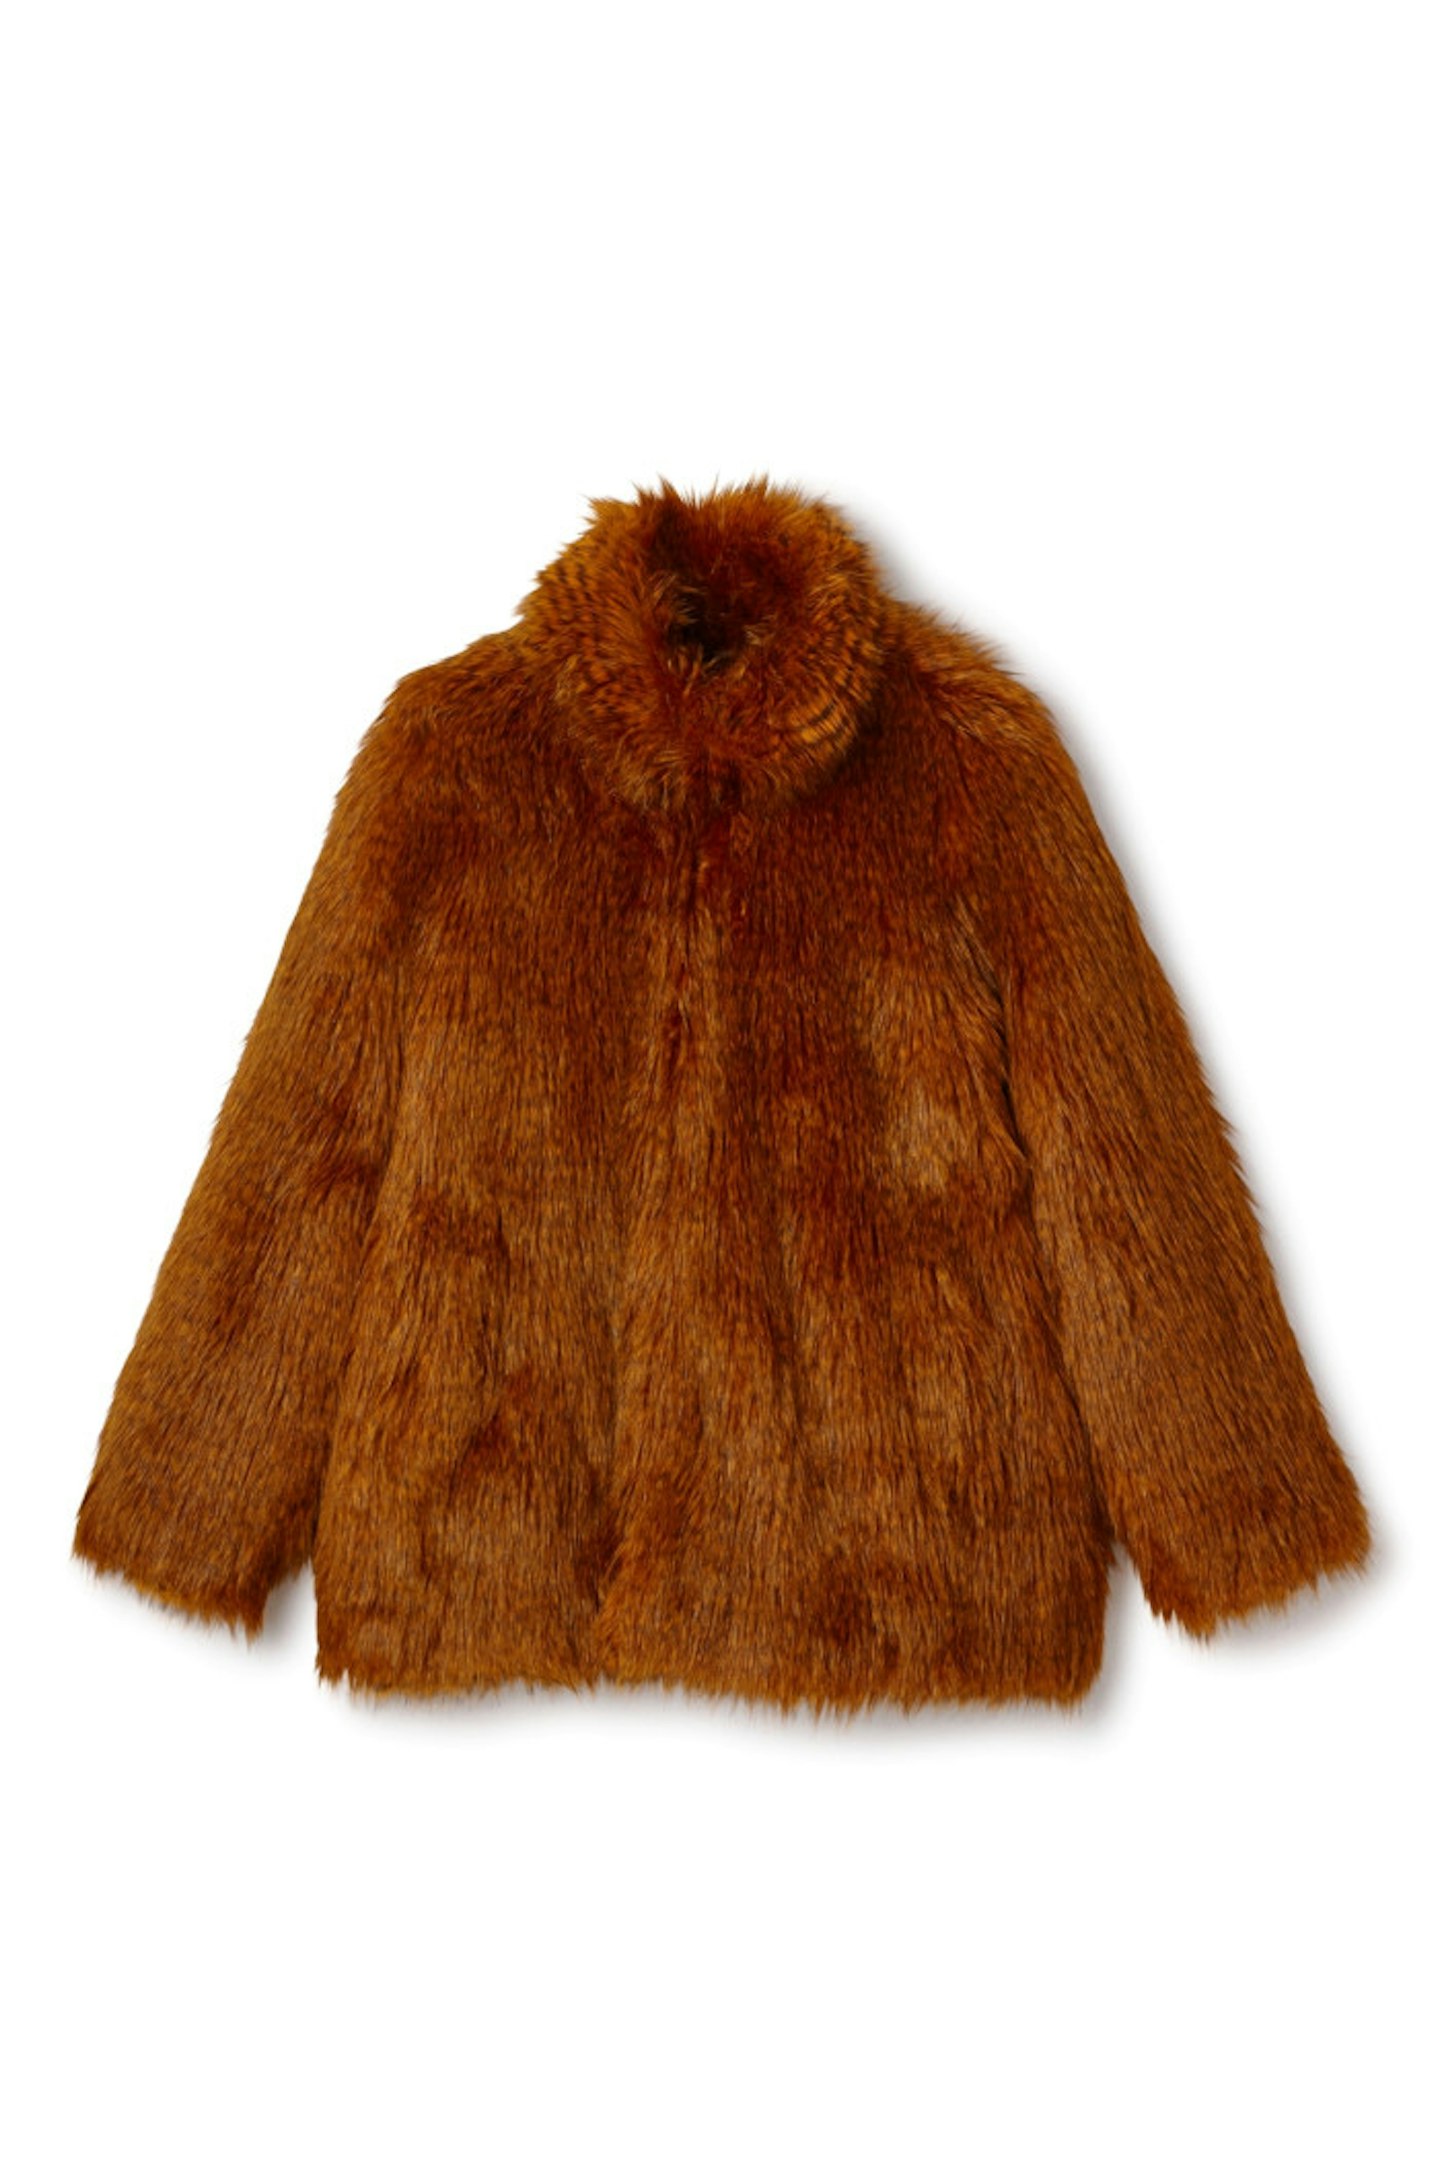 Weekday Faux Fur Coat, £135.00